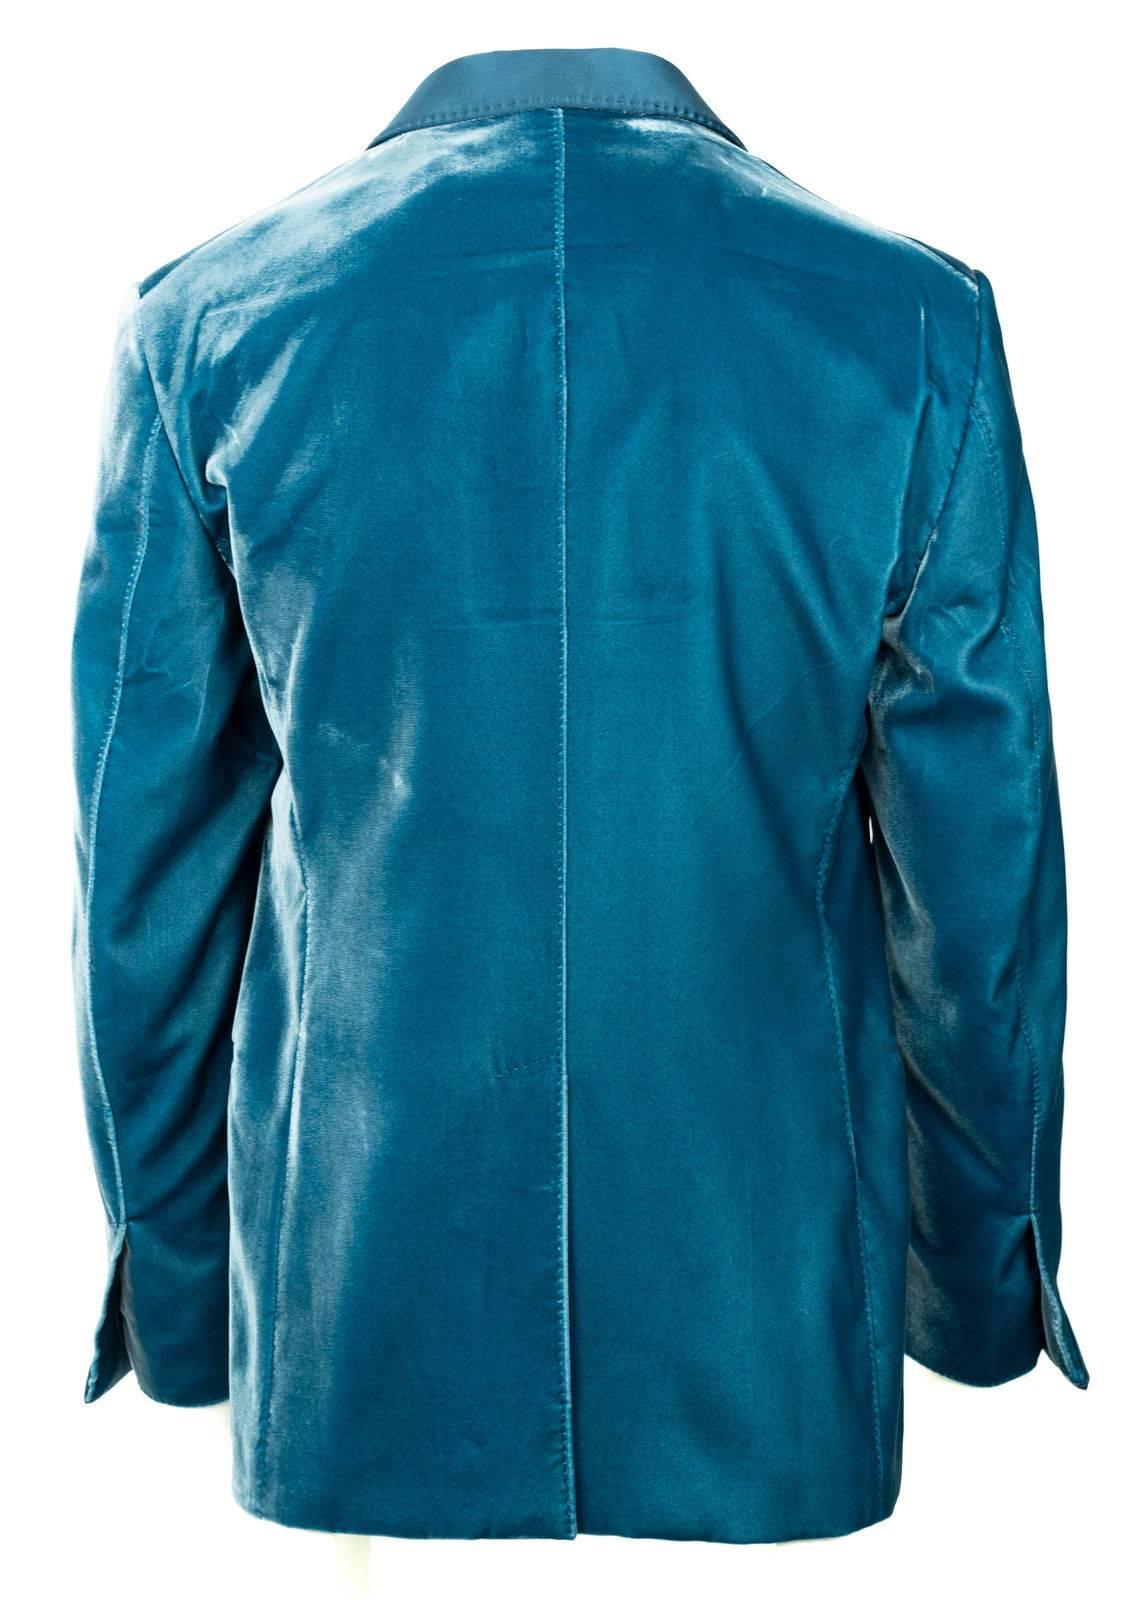 Men's Tom Ford Aqua Blue Velvet Shawl Lapel Shelton Cocktail Jacket Sz52R/42R RTL$3980 For Sale